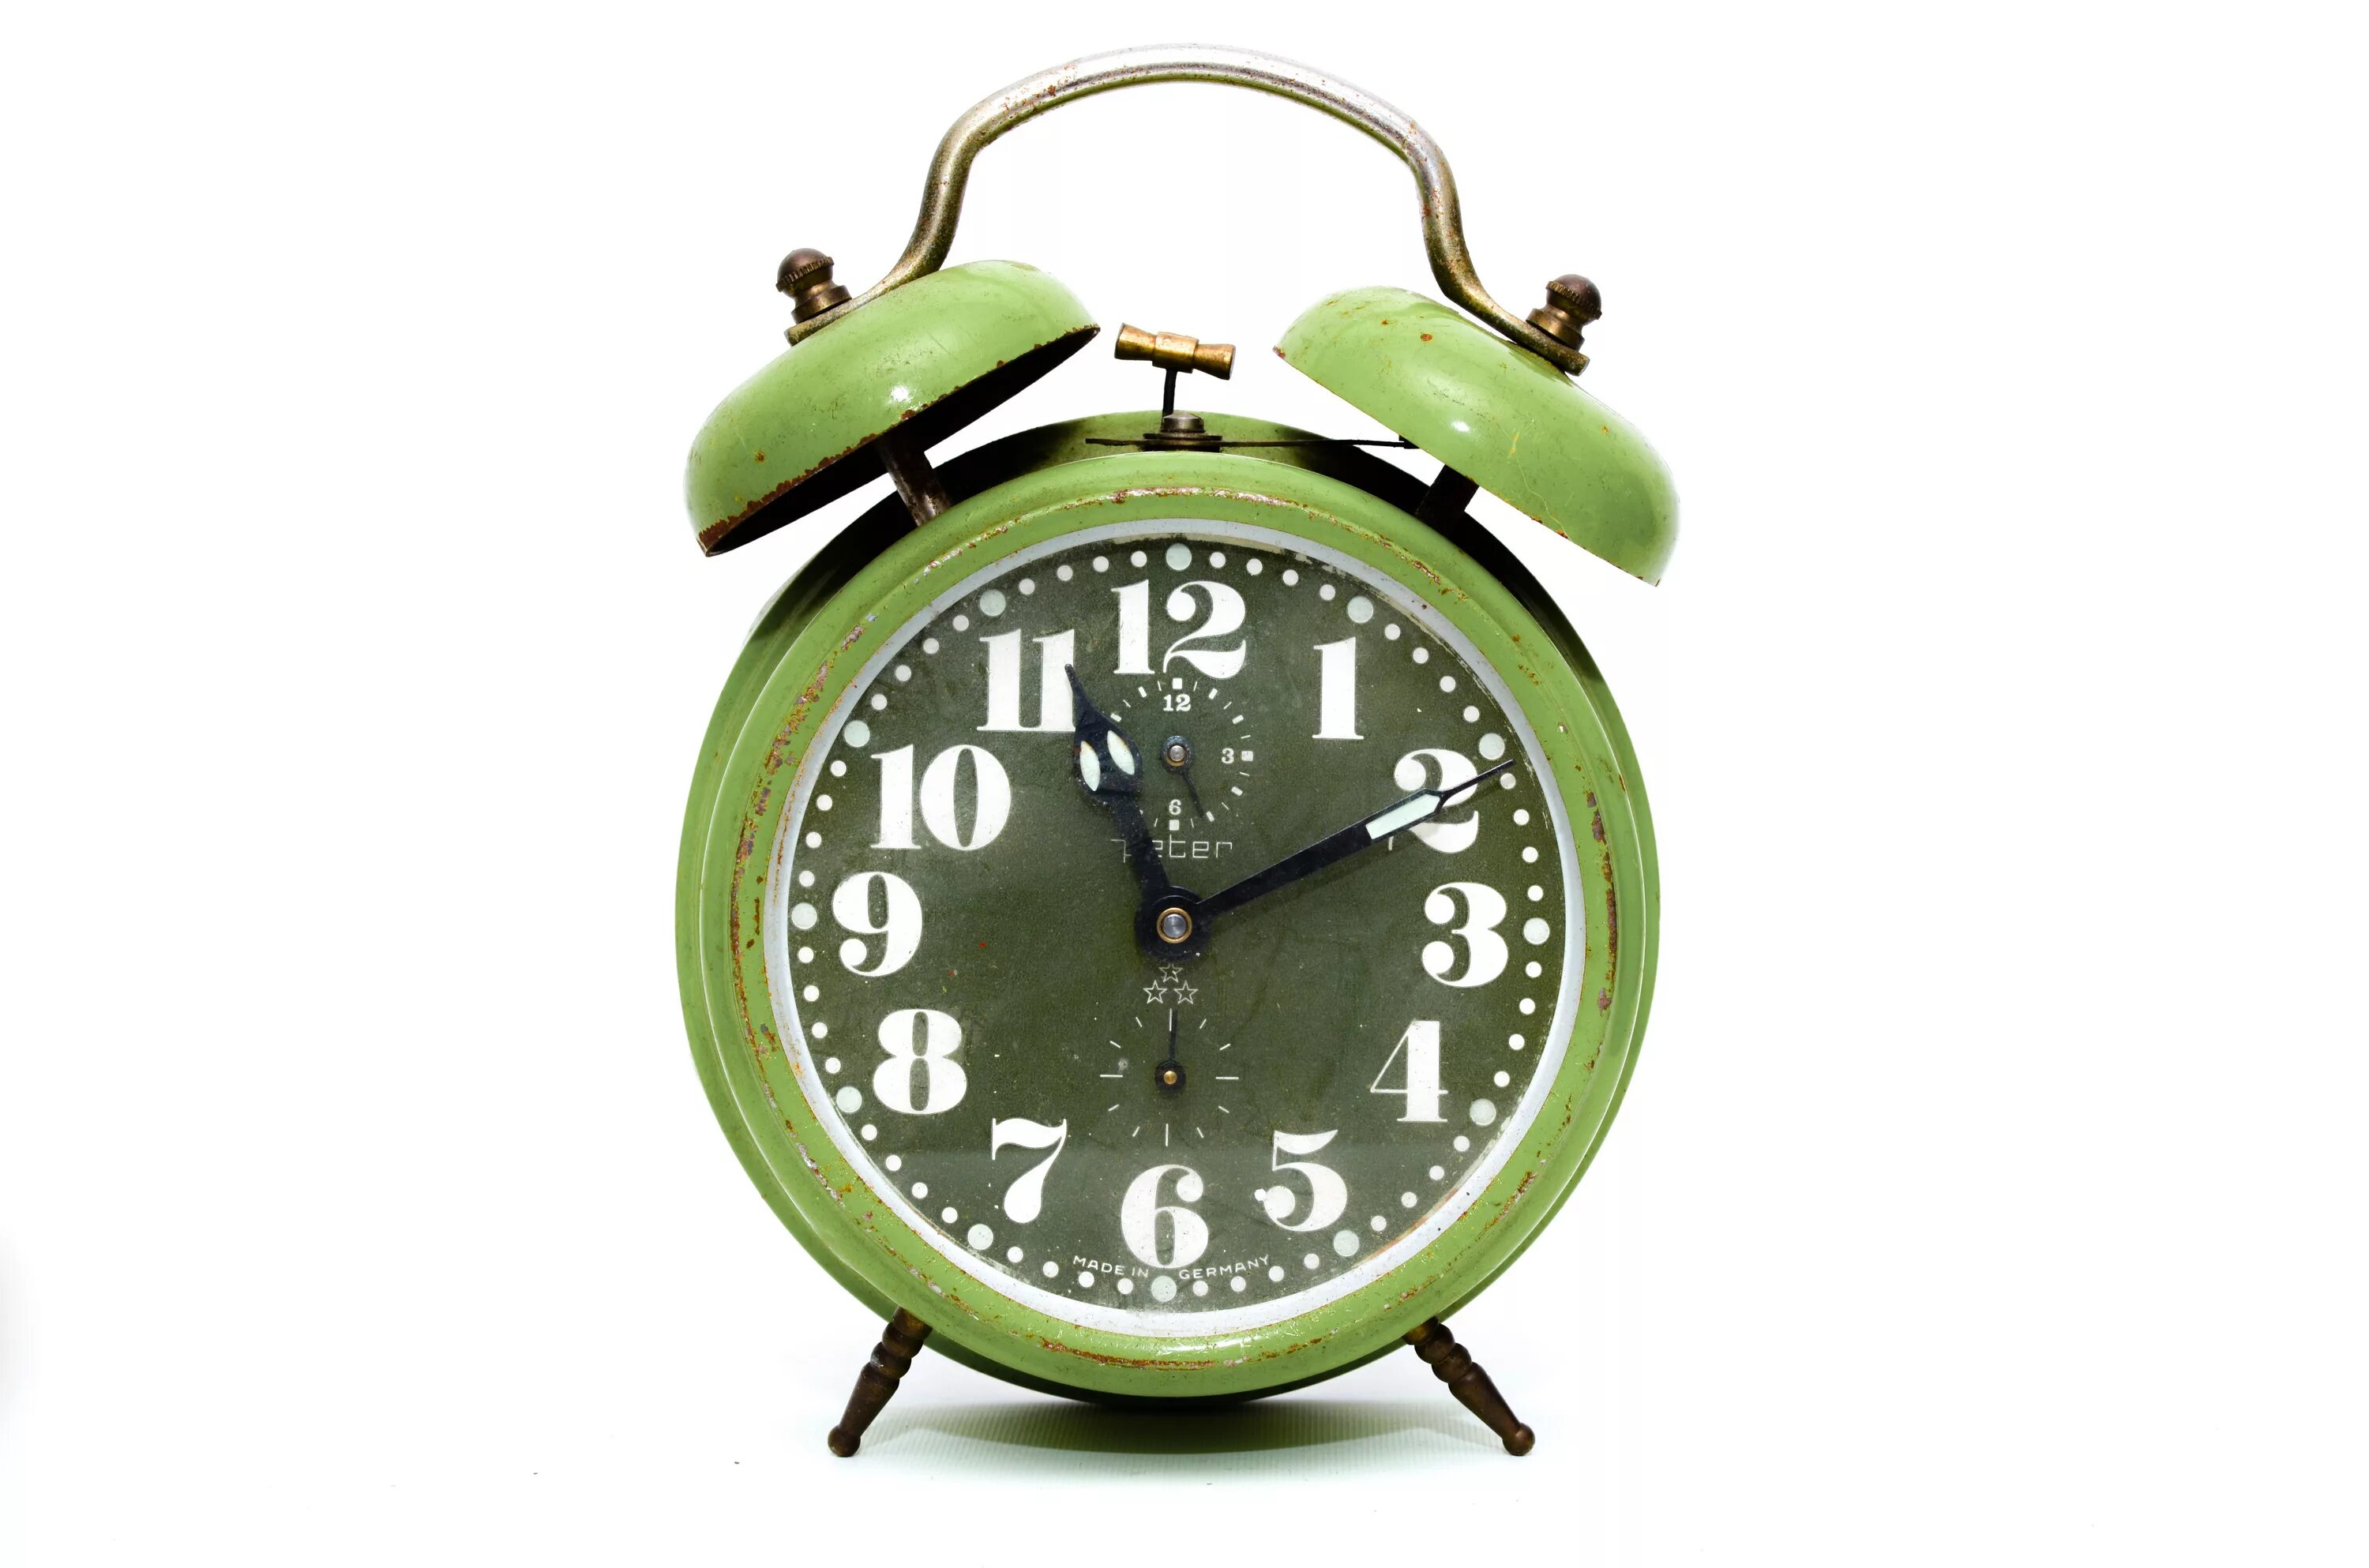 Будильник Аларм клок. Старые часы будильник. Часы настольные зеленые. Винтажный будильник.